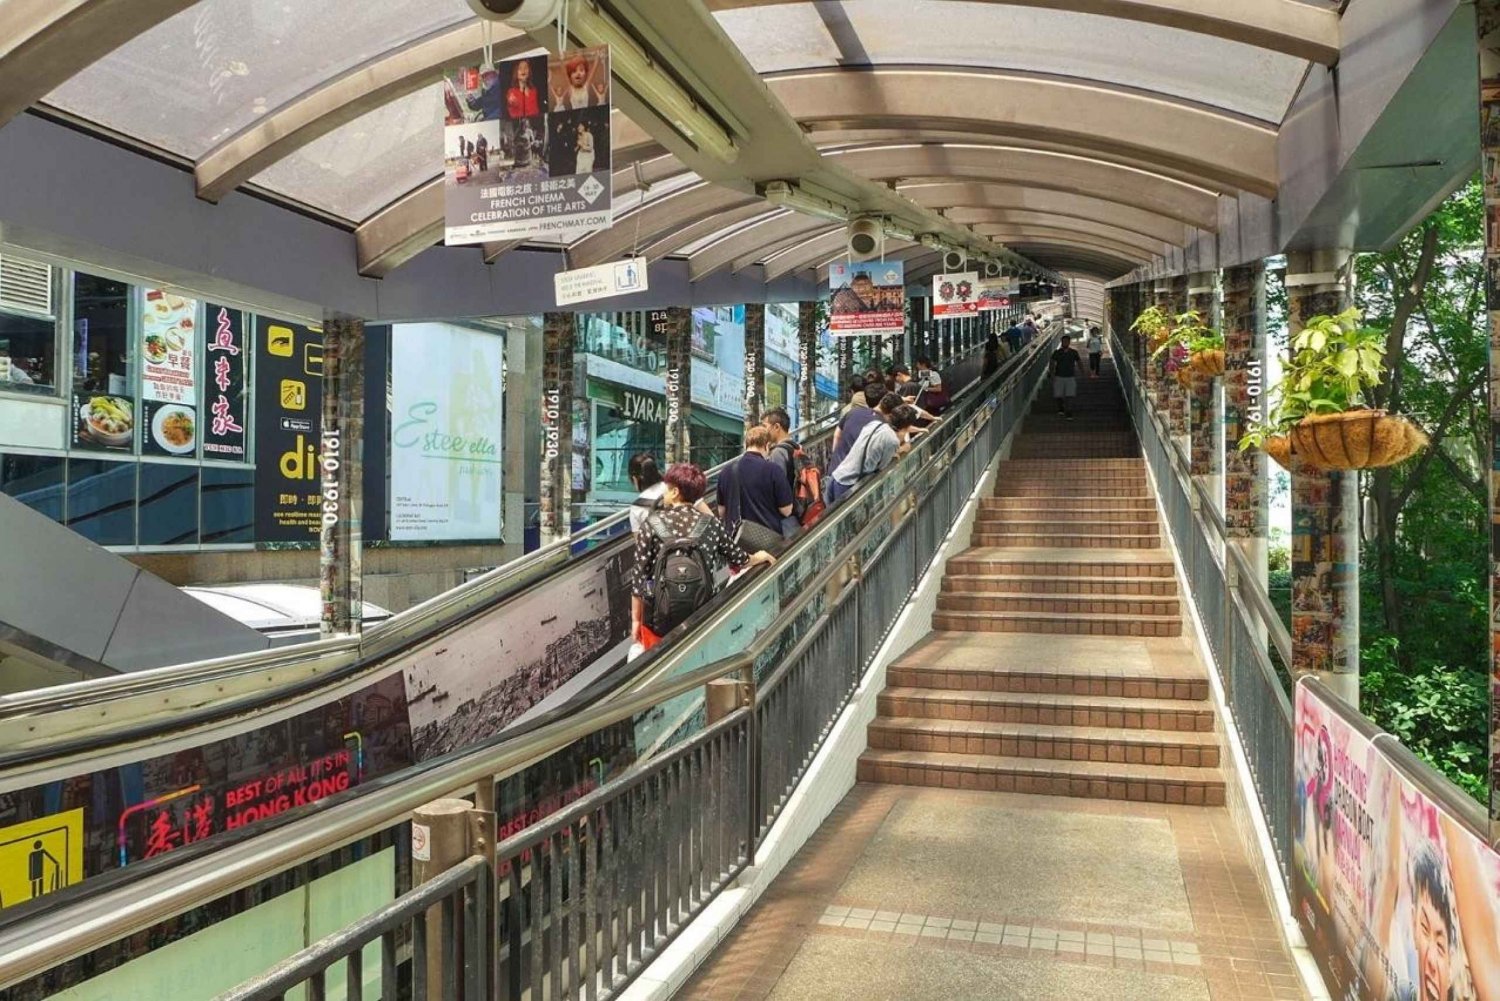 Hongkong: Fahrt mit der Peak Tram, Dim Sum Verkostung & Highlights der Stadt